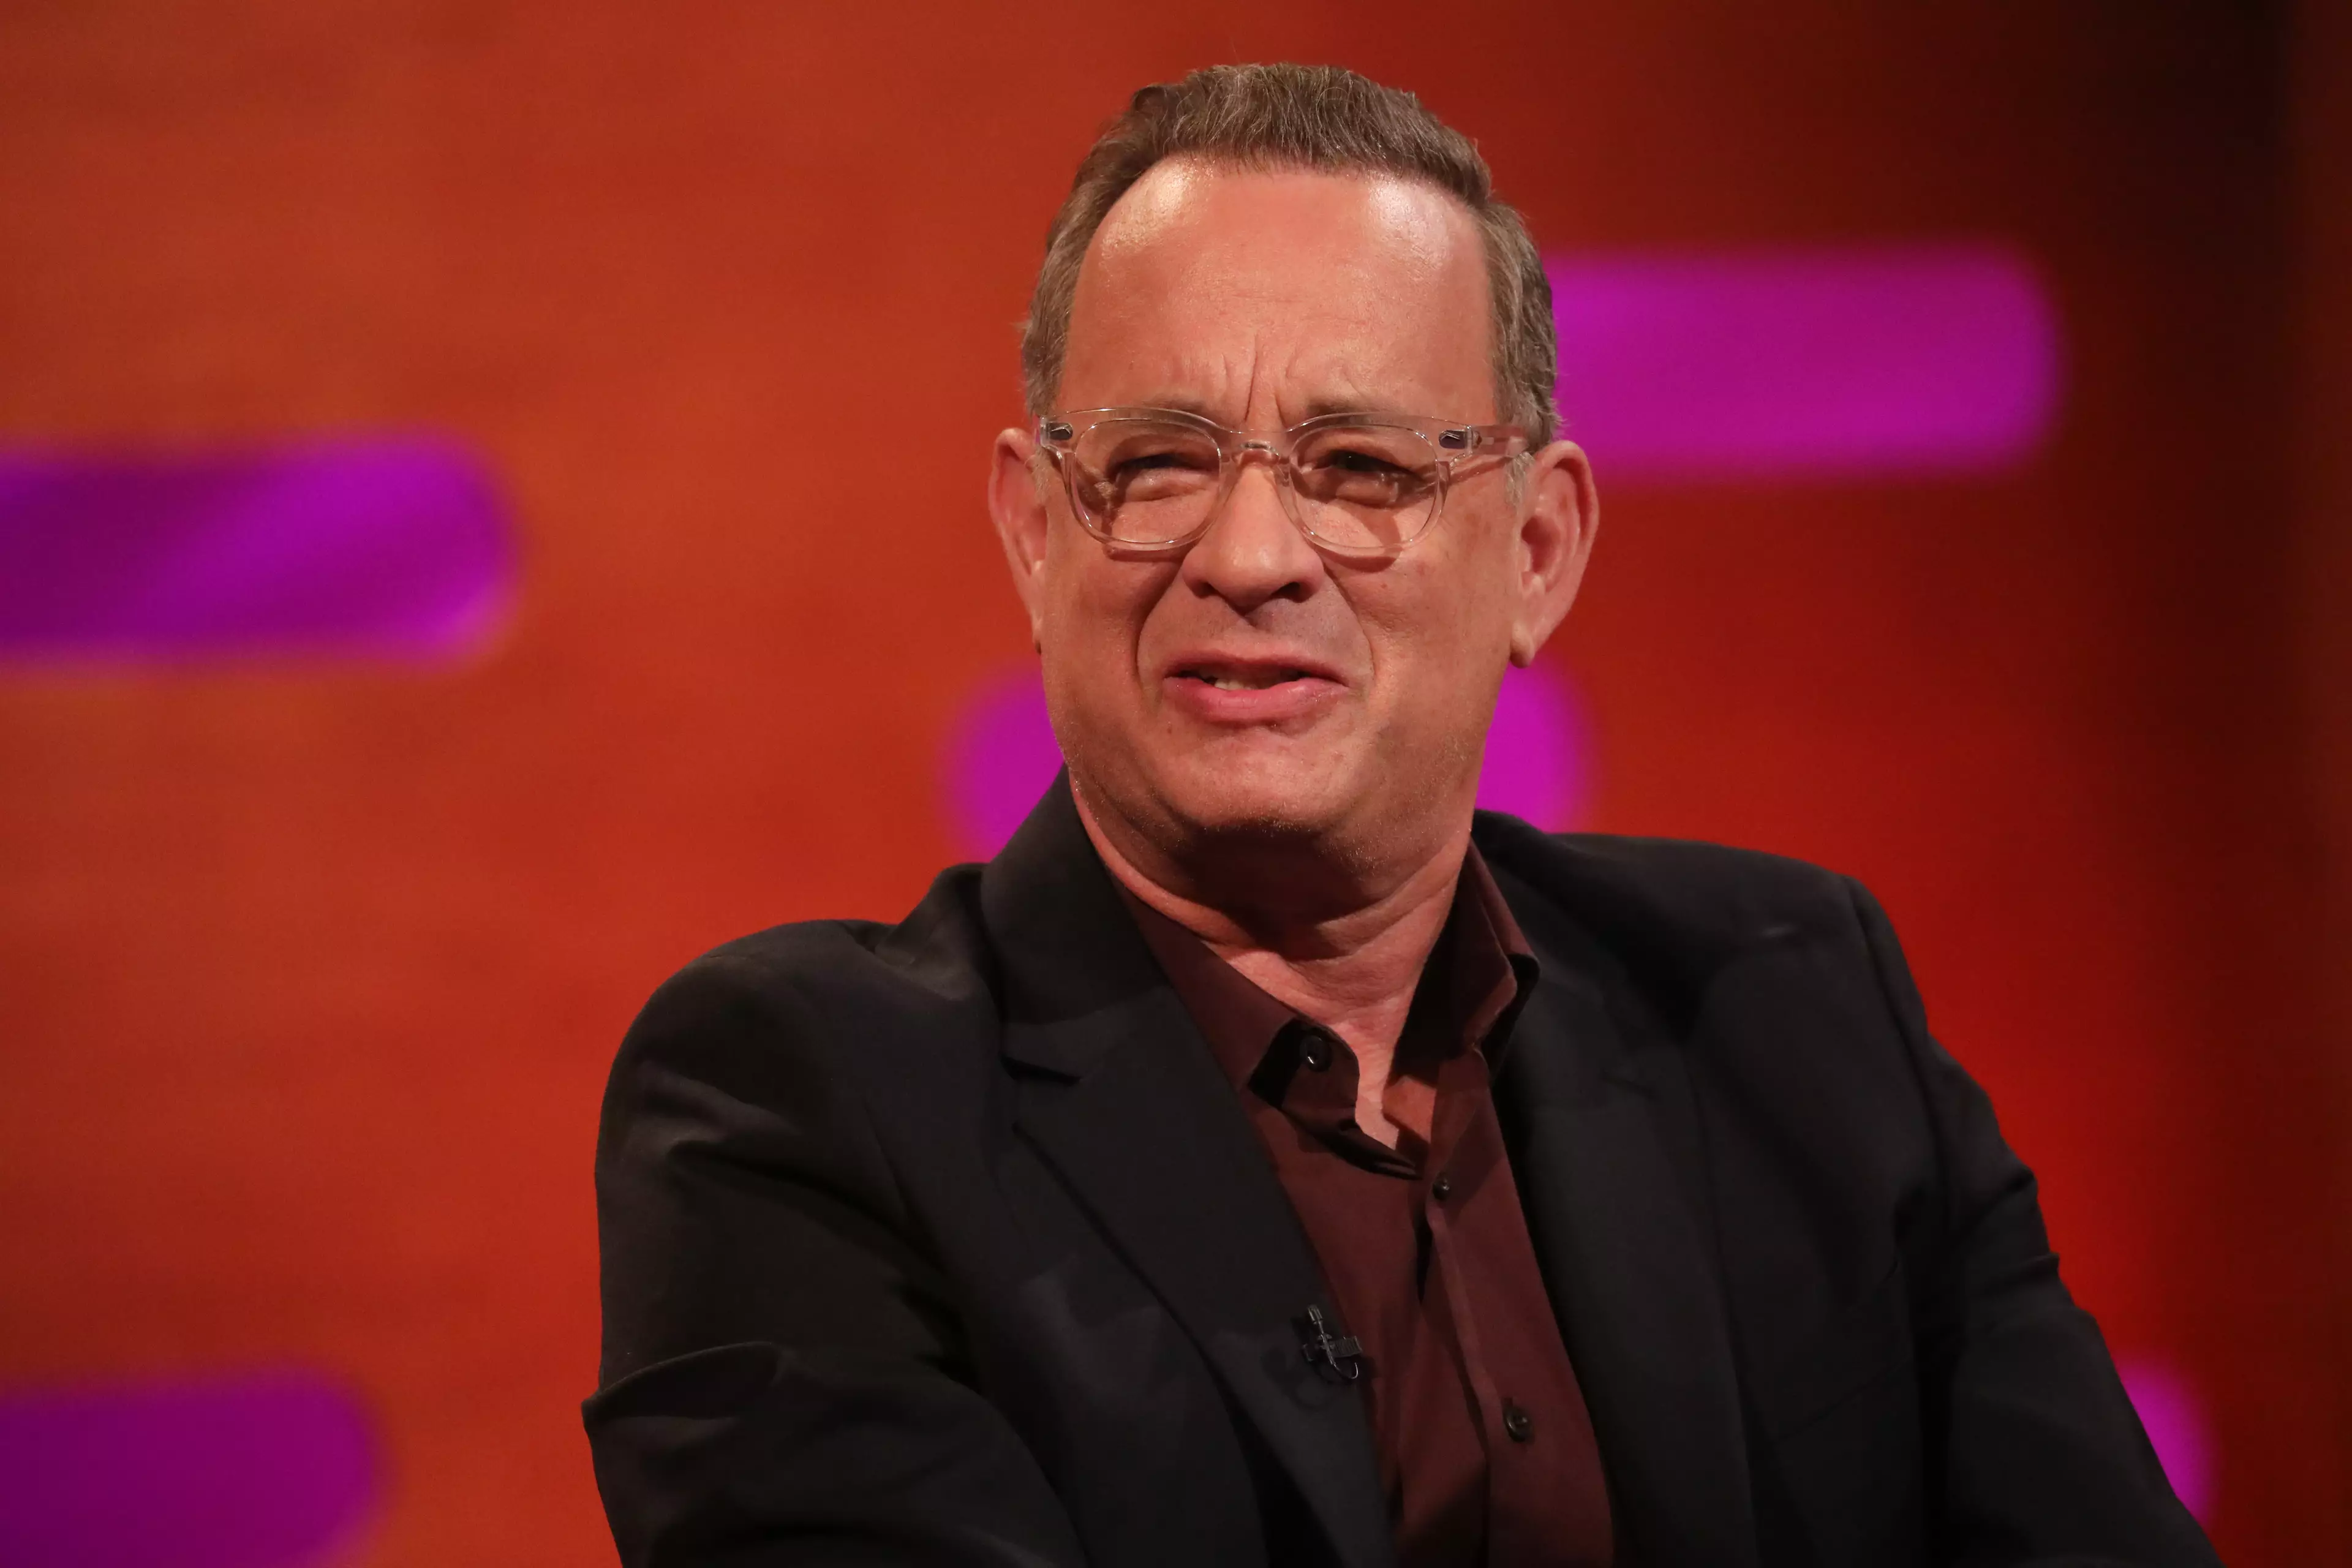 Tom Hanks has been awarded a Lifetime Achievement Award